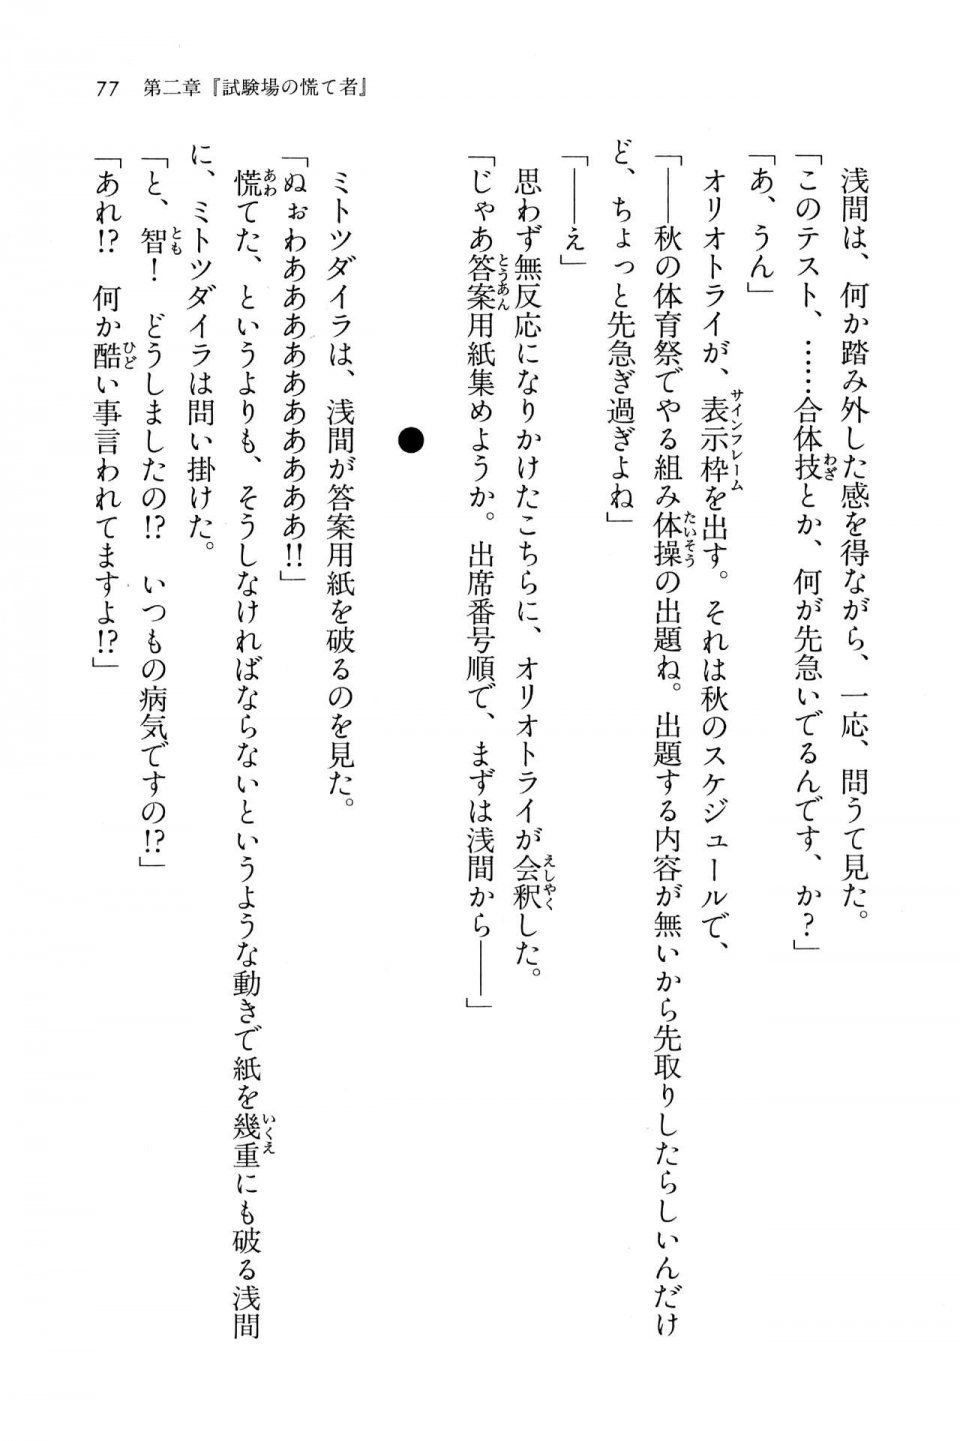 Kyoukai Senjou no Horizon BD Special Mininovel Vol 7(4A) - Photo #81